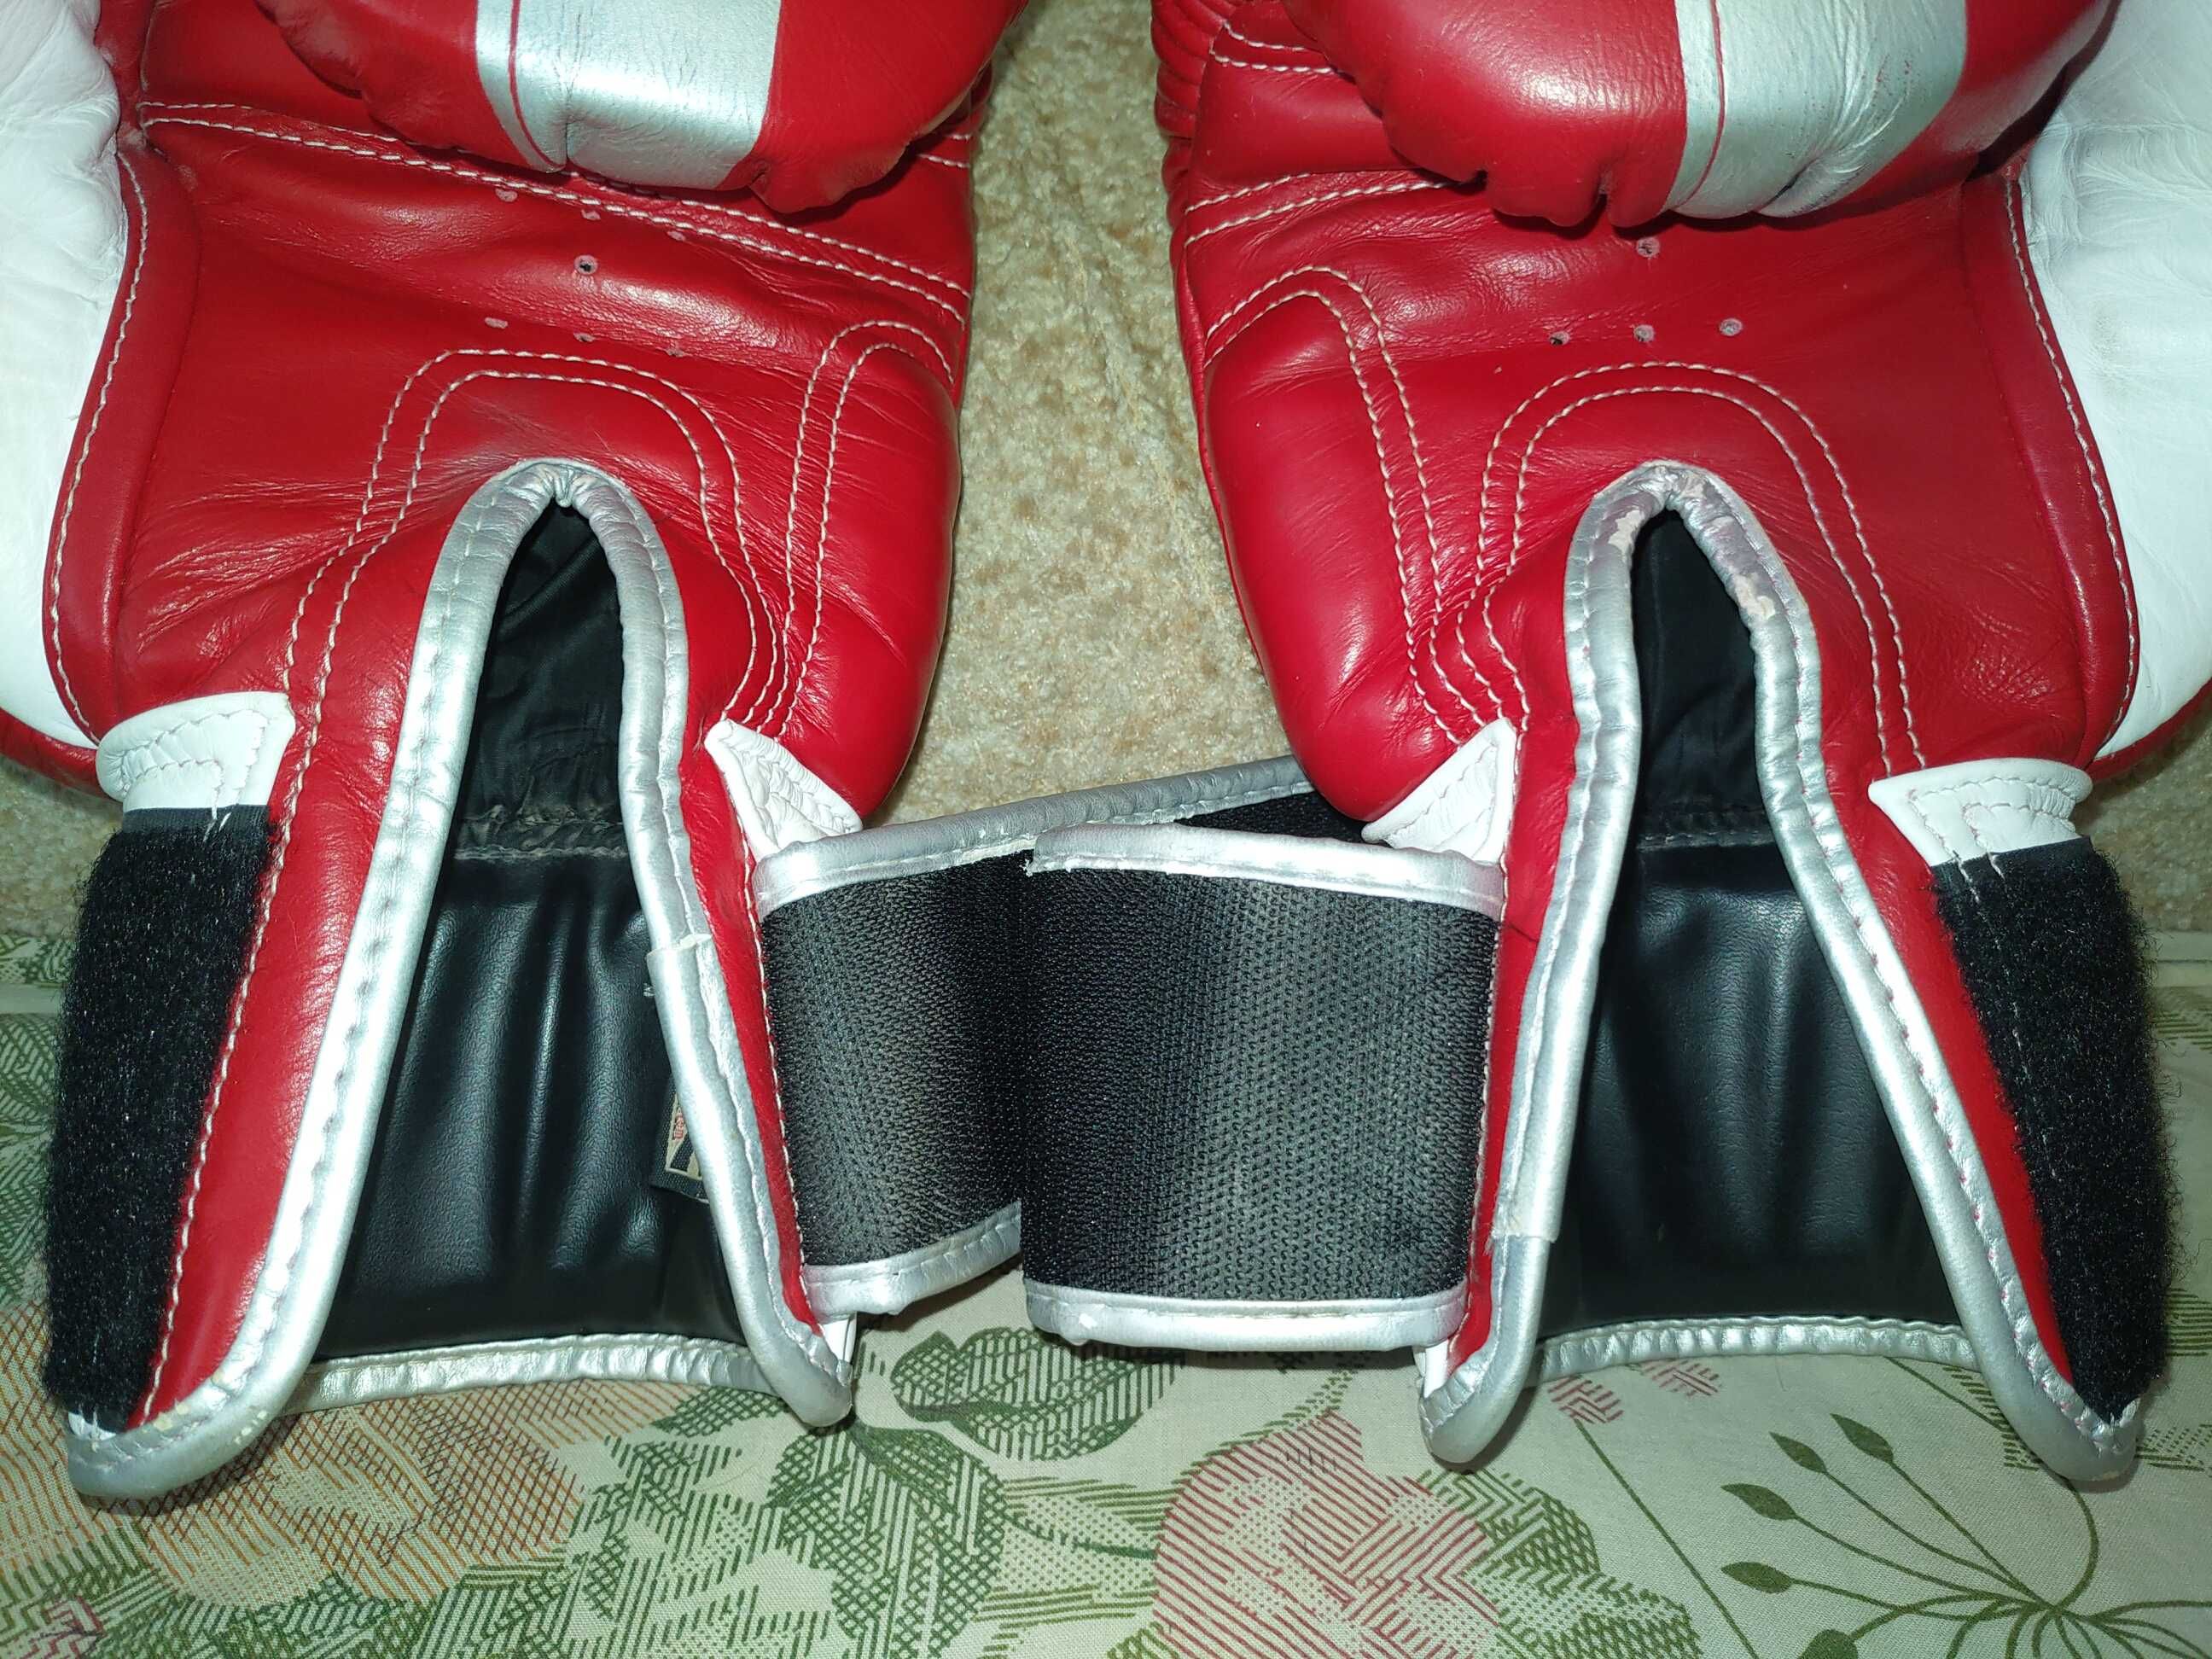 Перчатки Yokkao тайский бокс